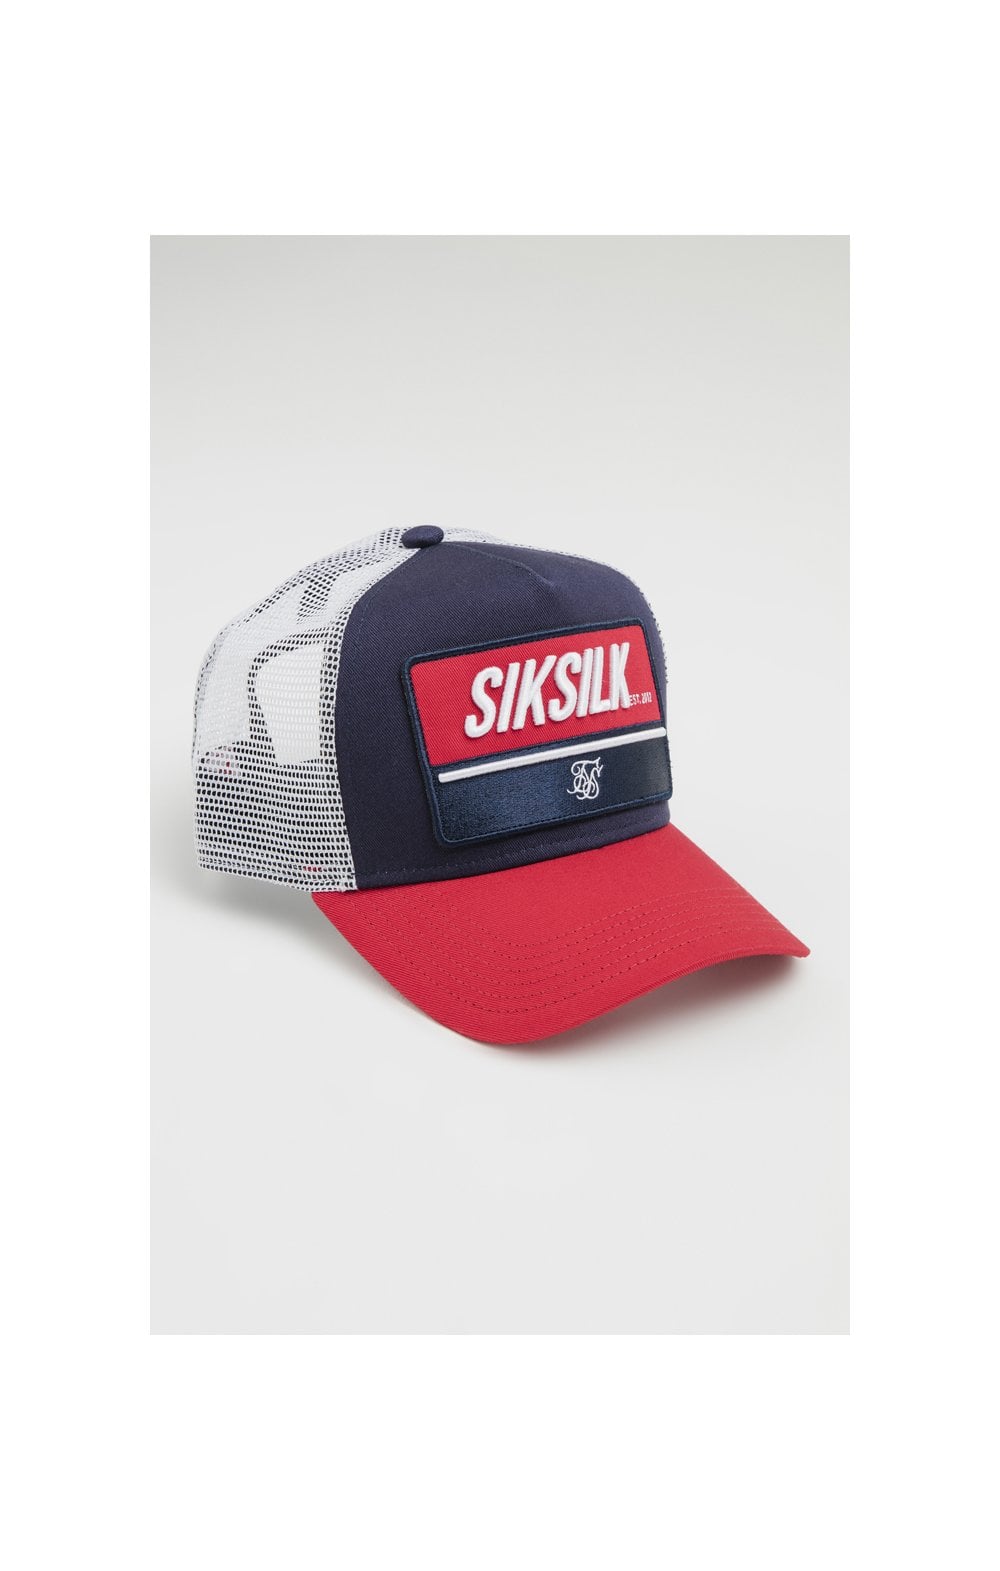 SikSilk Retro Patch Trucker - Red White &amp; Blue